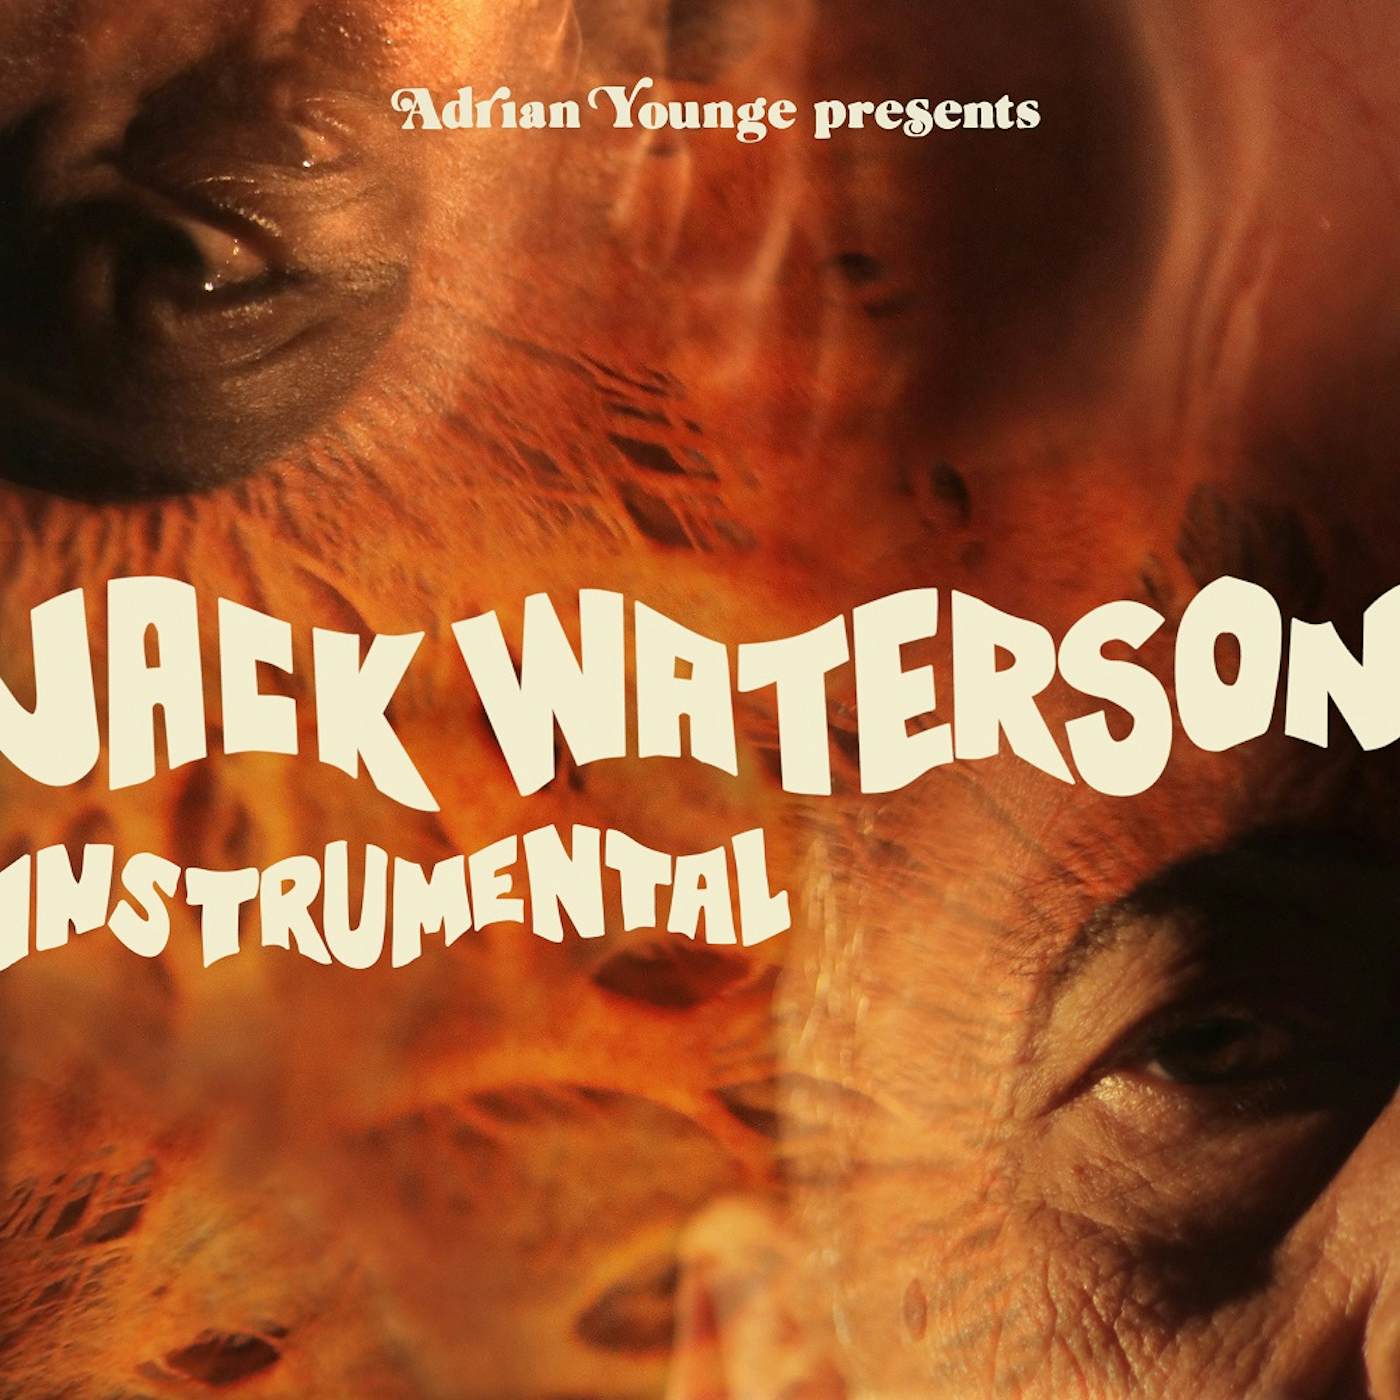 Adrian Younge JACK WATERSON INSTRUMENTALS Vinyl Record